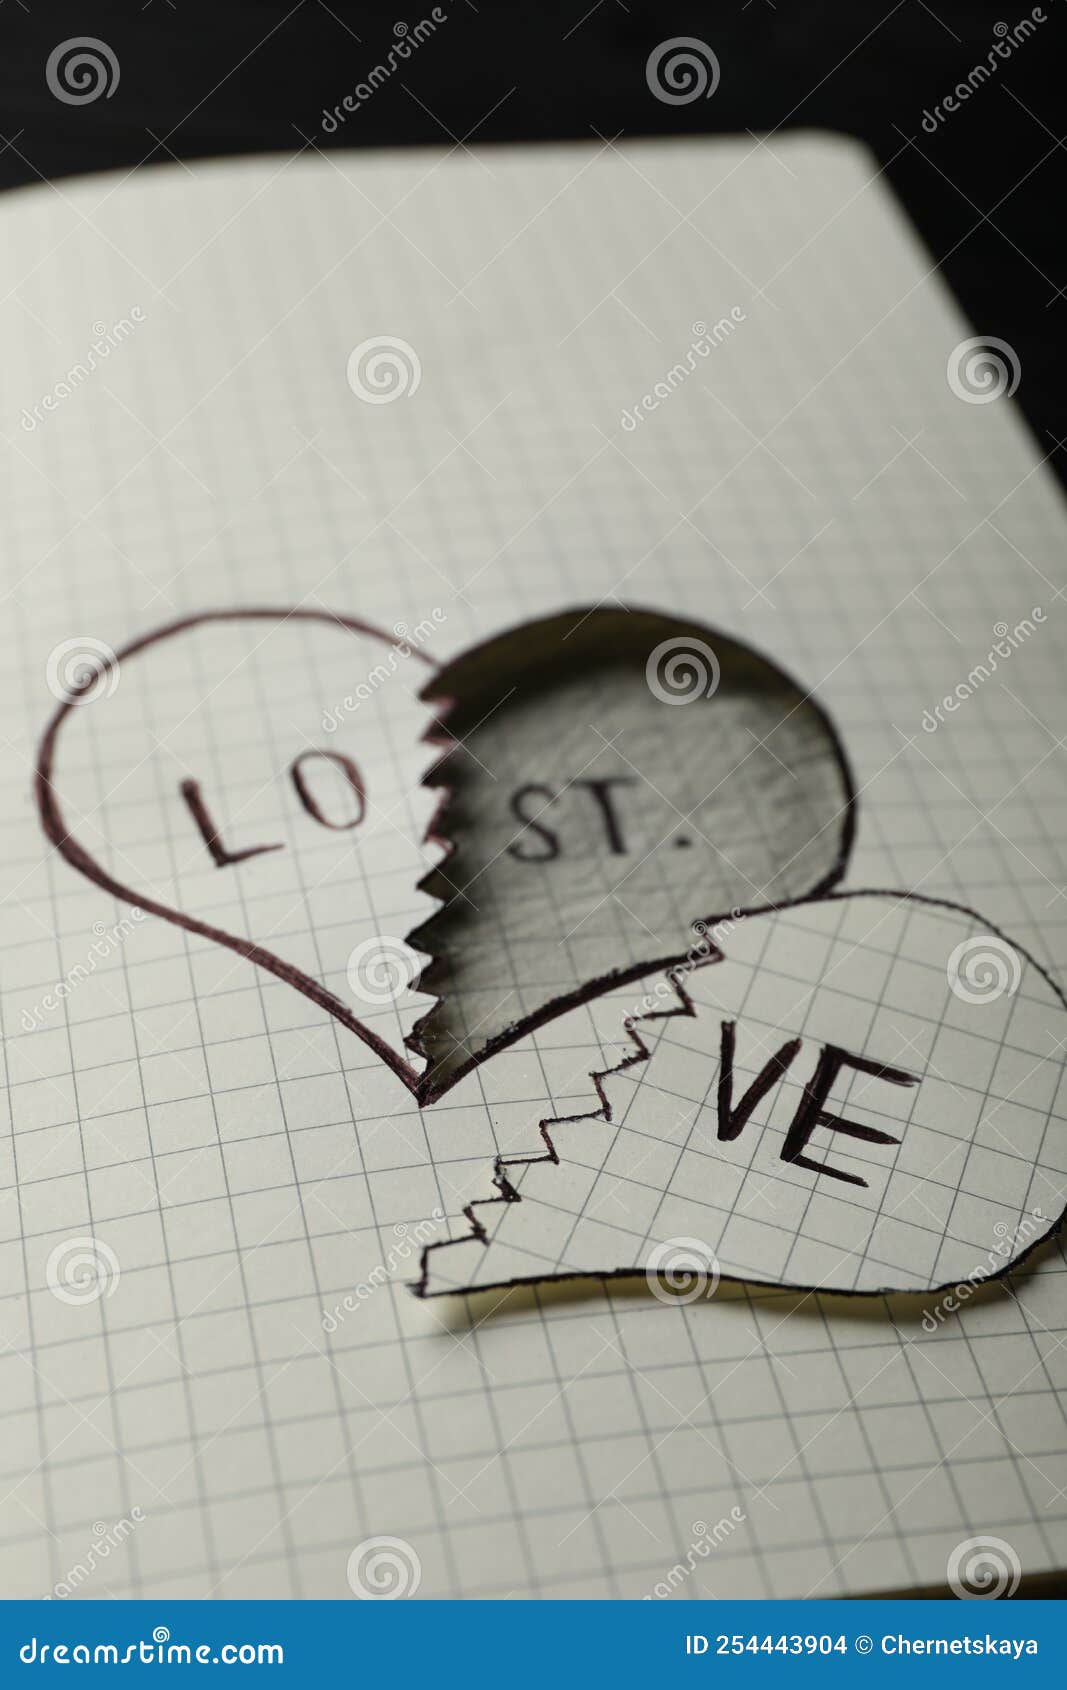 Broken Heart  Lost Love by Apollo440 on DeviantArt